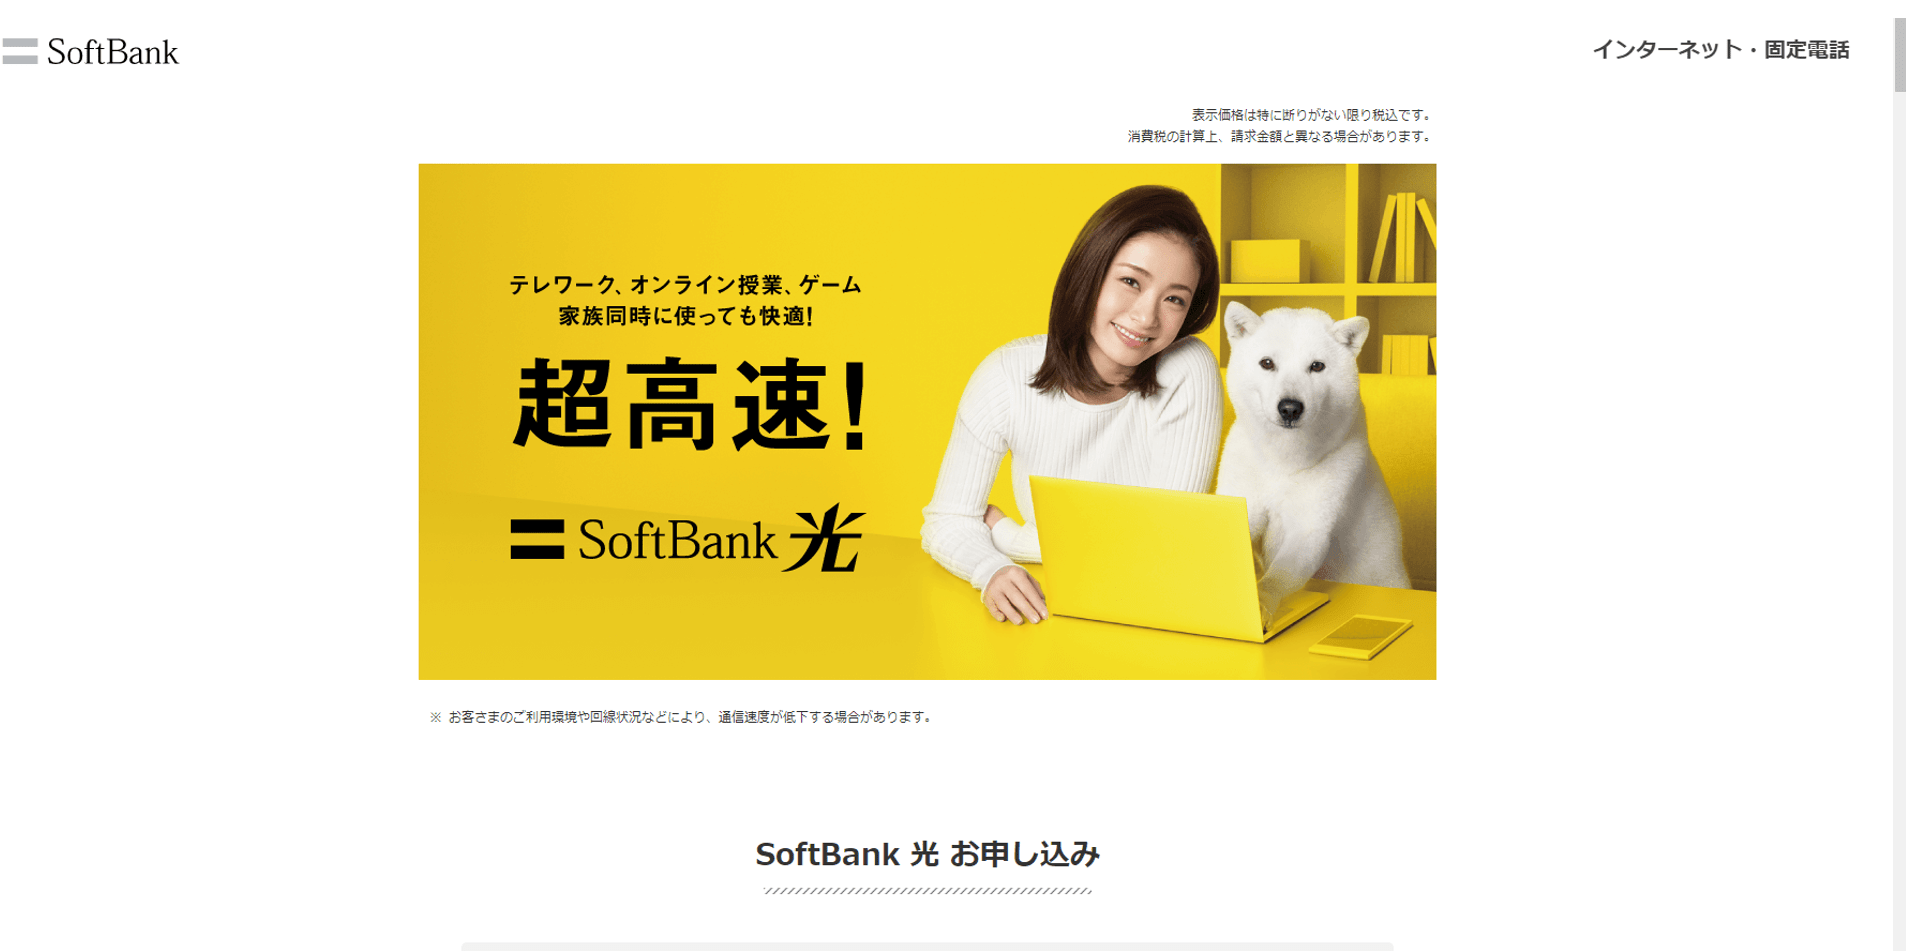 SoftBank Hikari: How to Subscribe Online